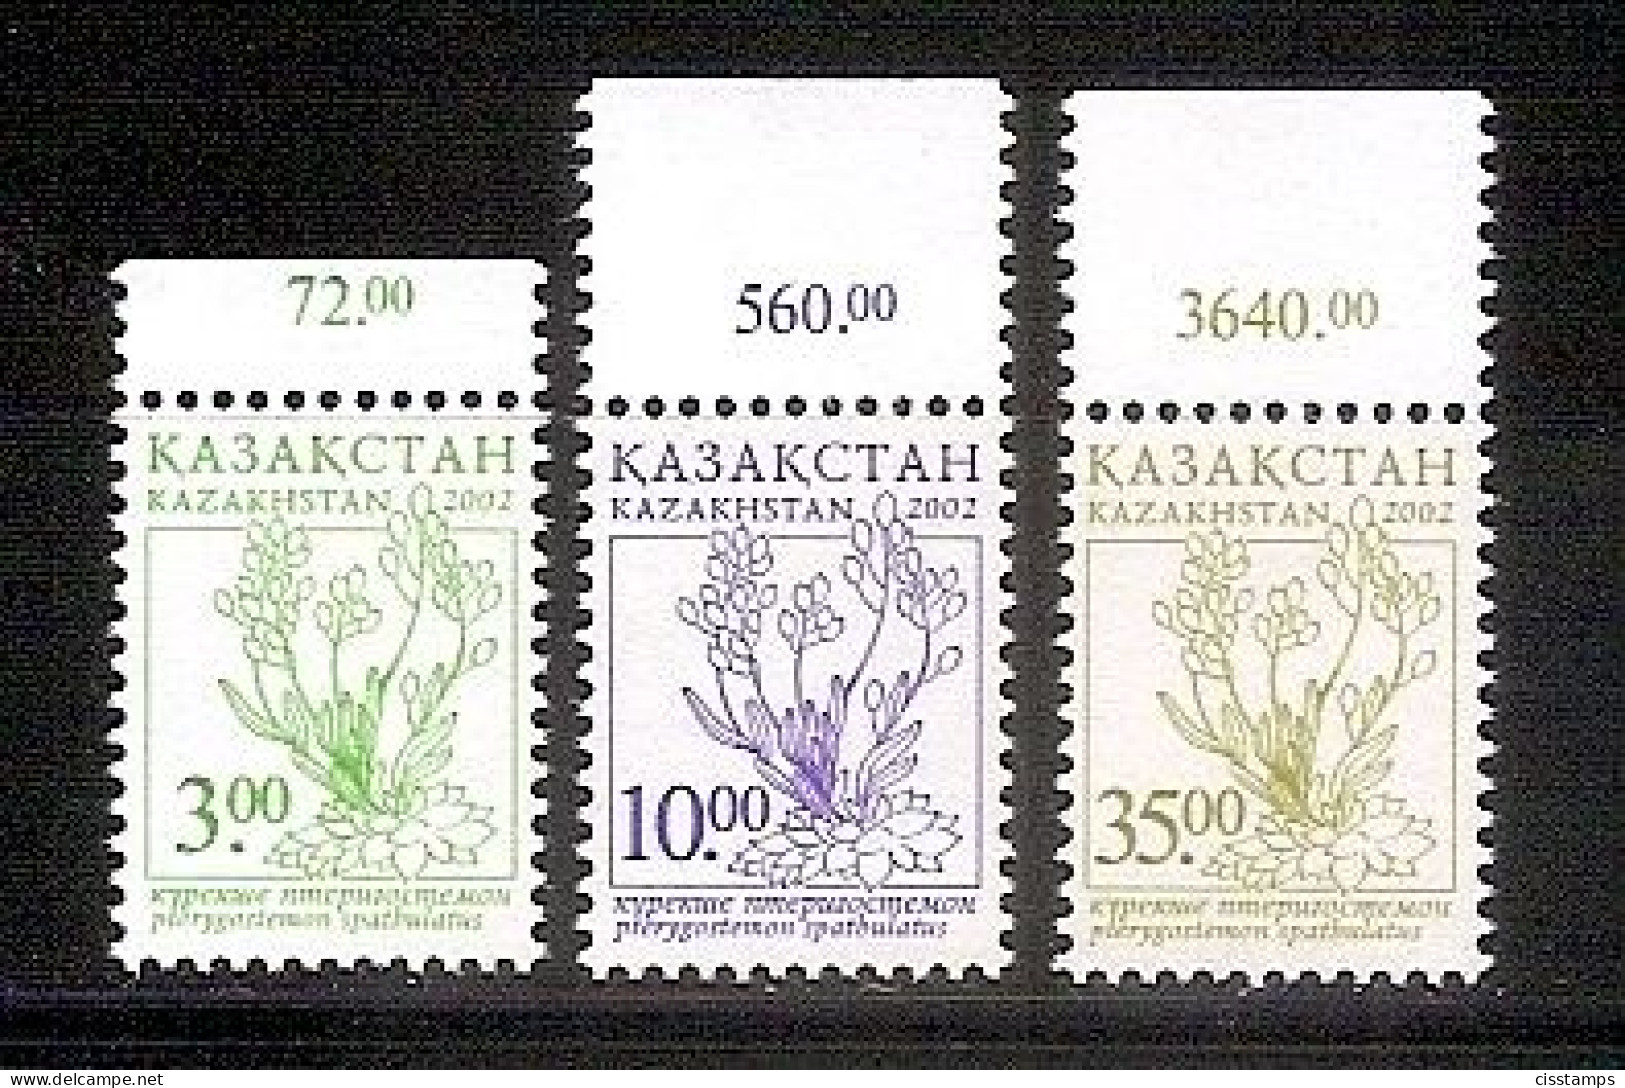 KAZAKHSTAN 2002●Flora●Definitive●Mi 374-75, 378 (issued 30 April) MNH - Kazajstán